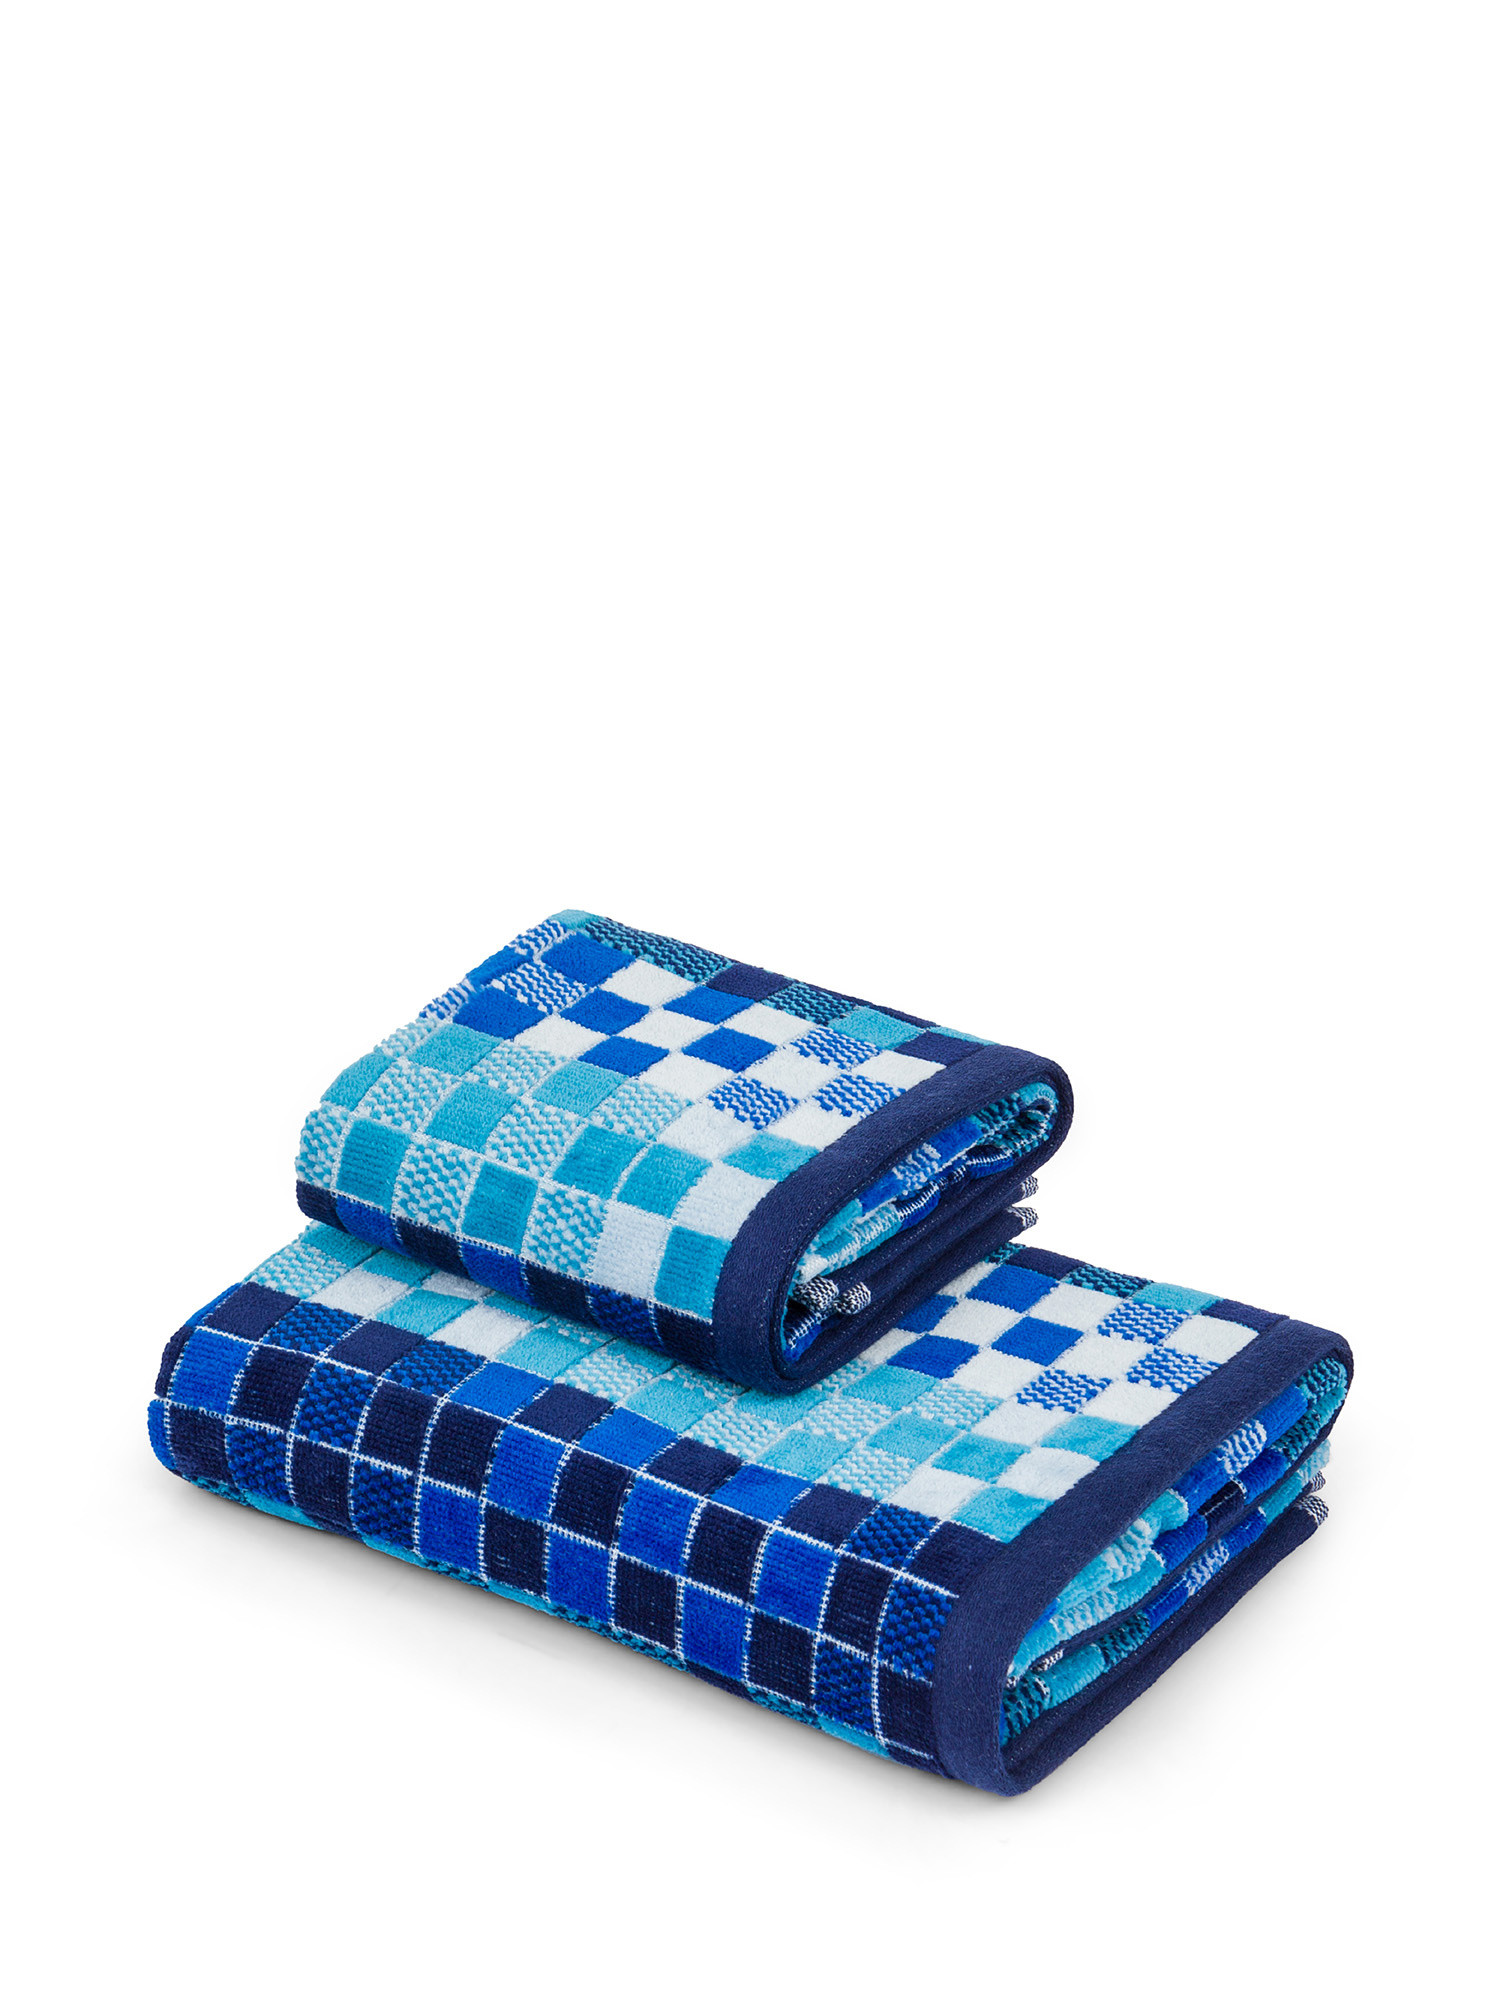 Asciugamano in velour di cotone effetto mosaico, Blu, large image number 0